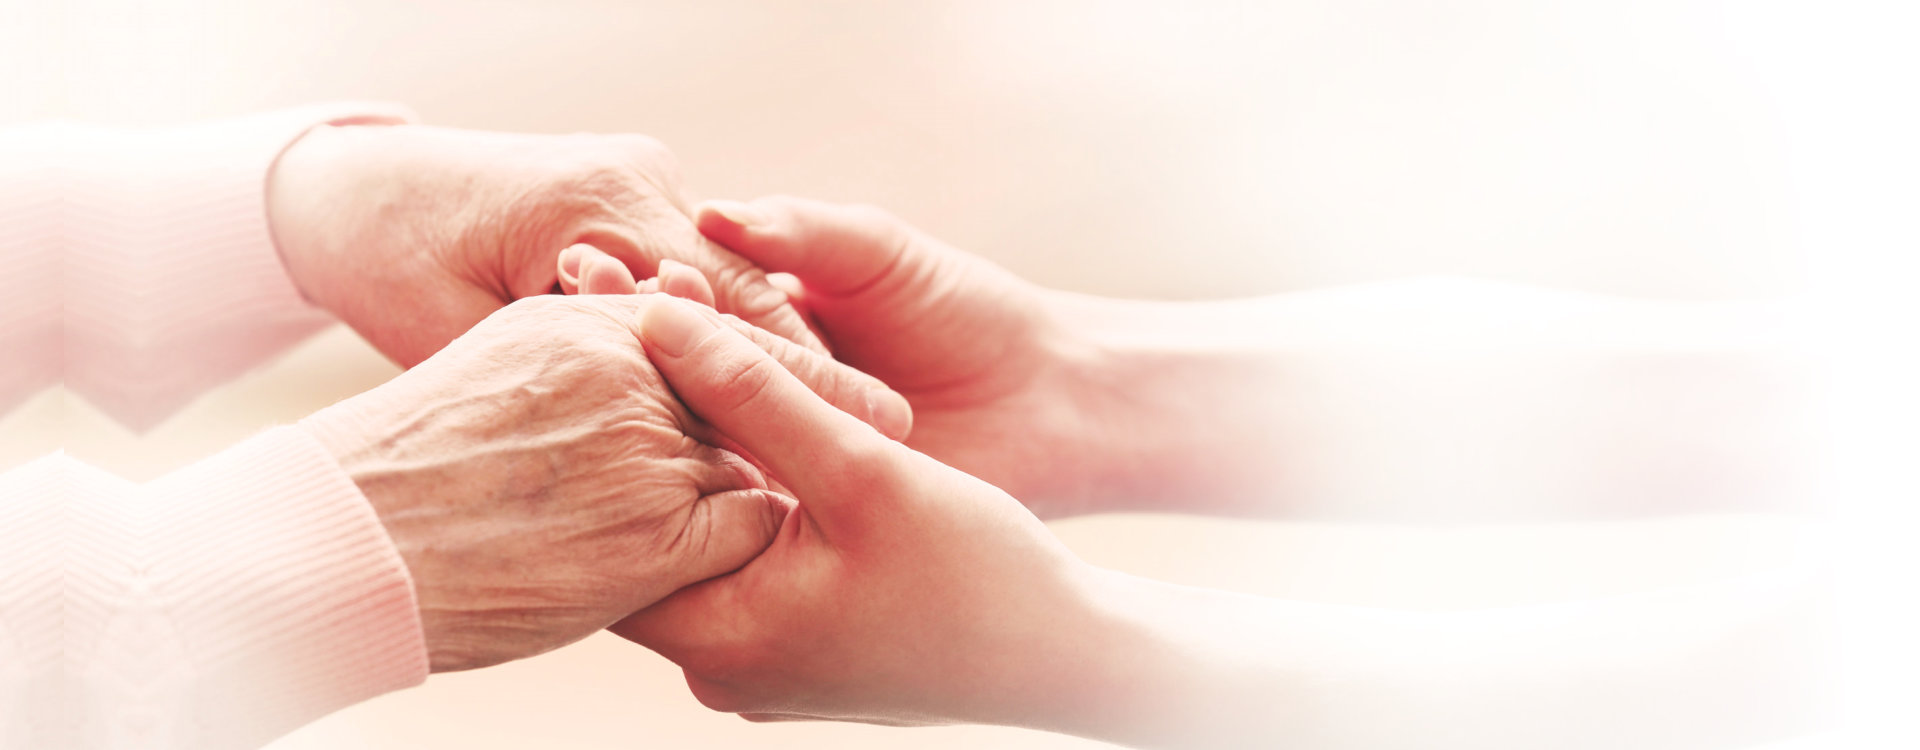 caregiver and patients hands